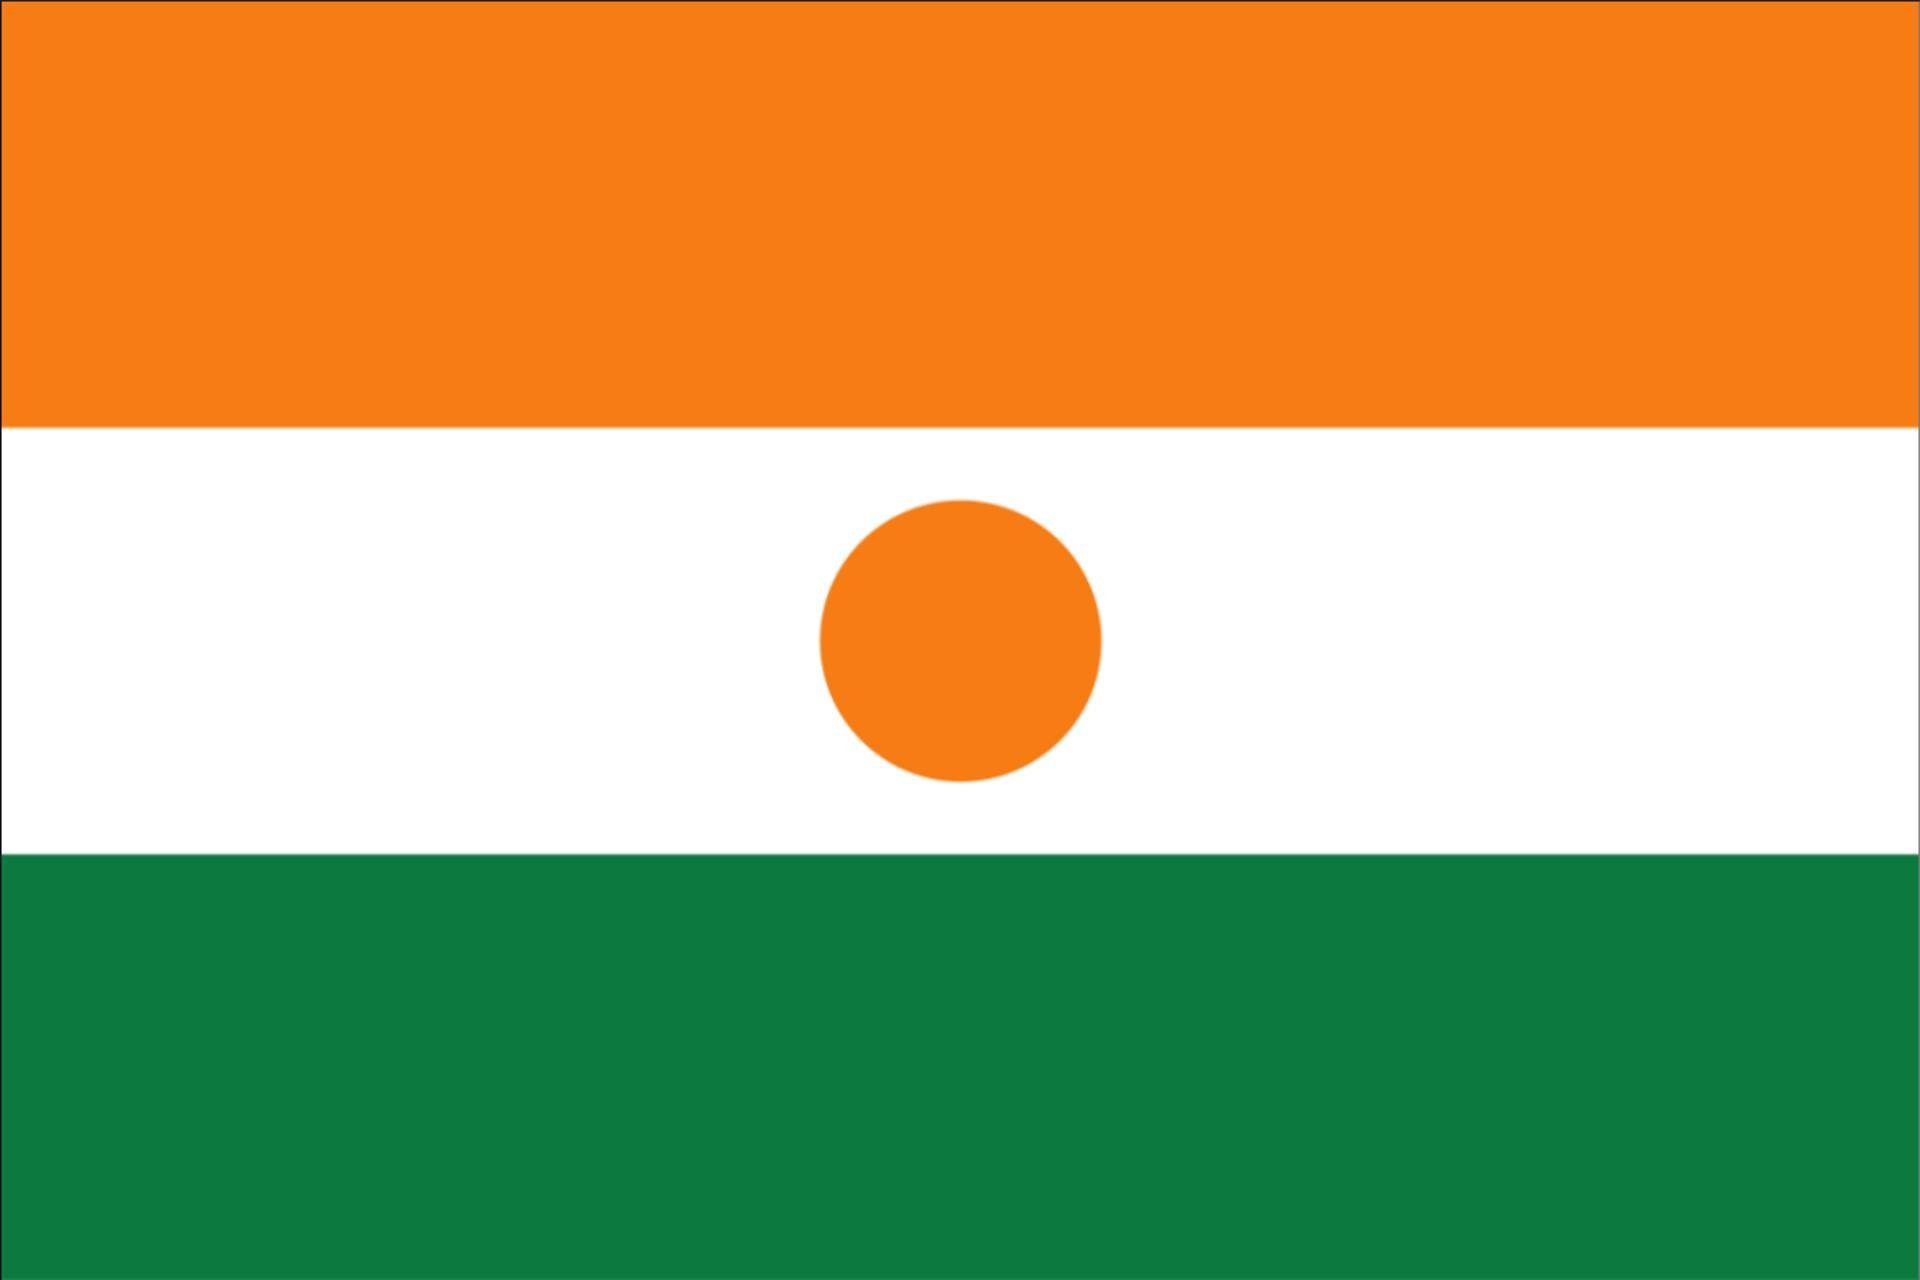 80 Niger g/m² Flagge flaggenmeer